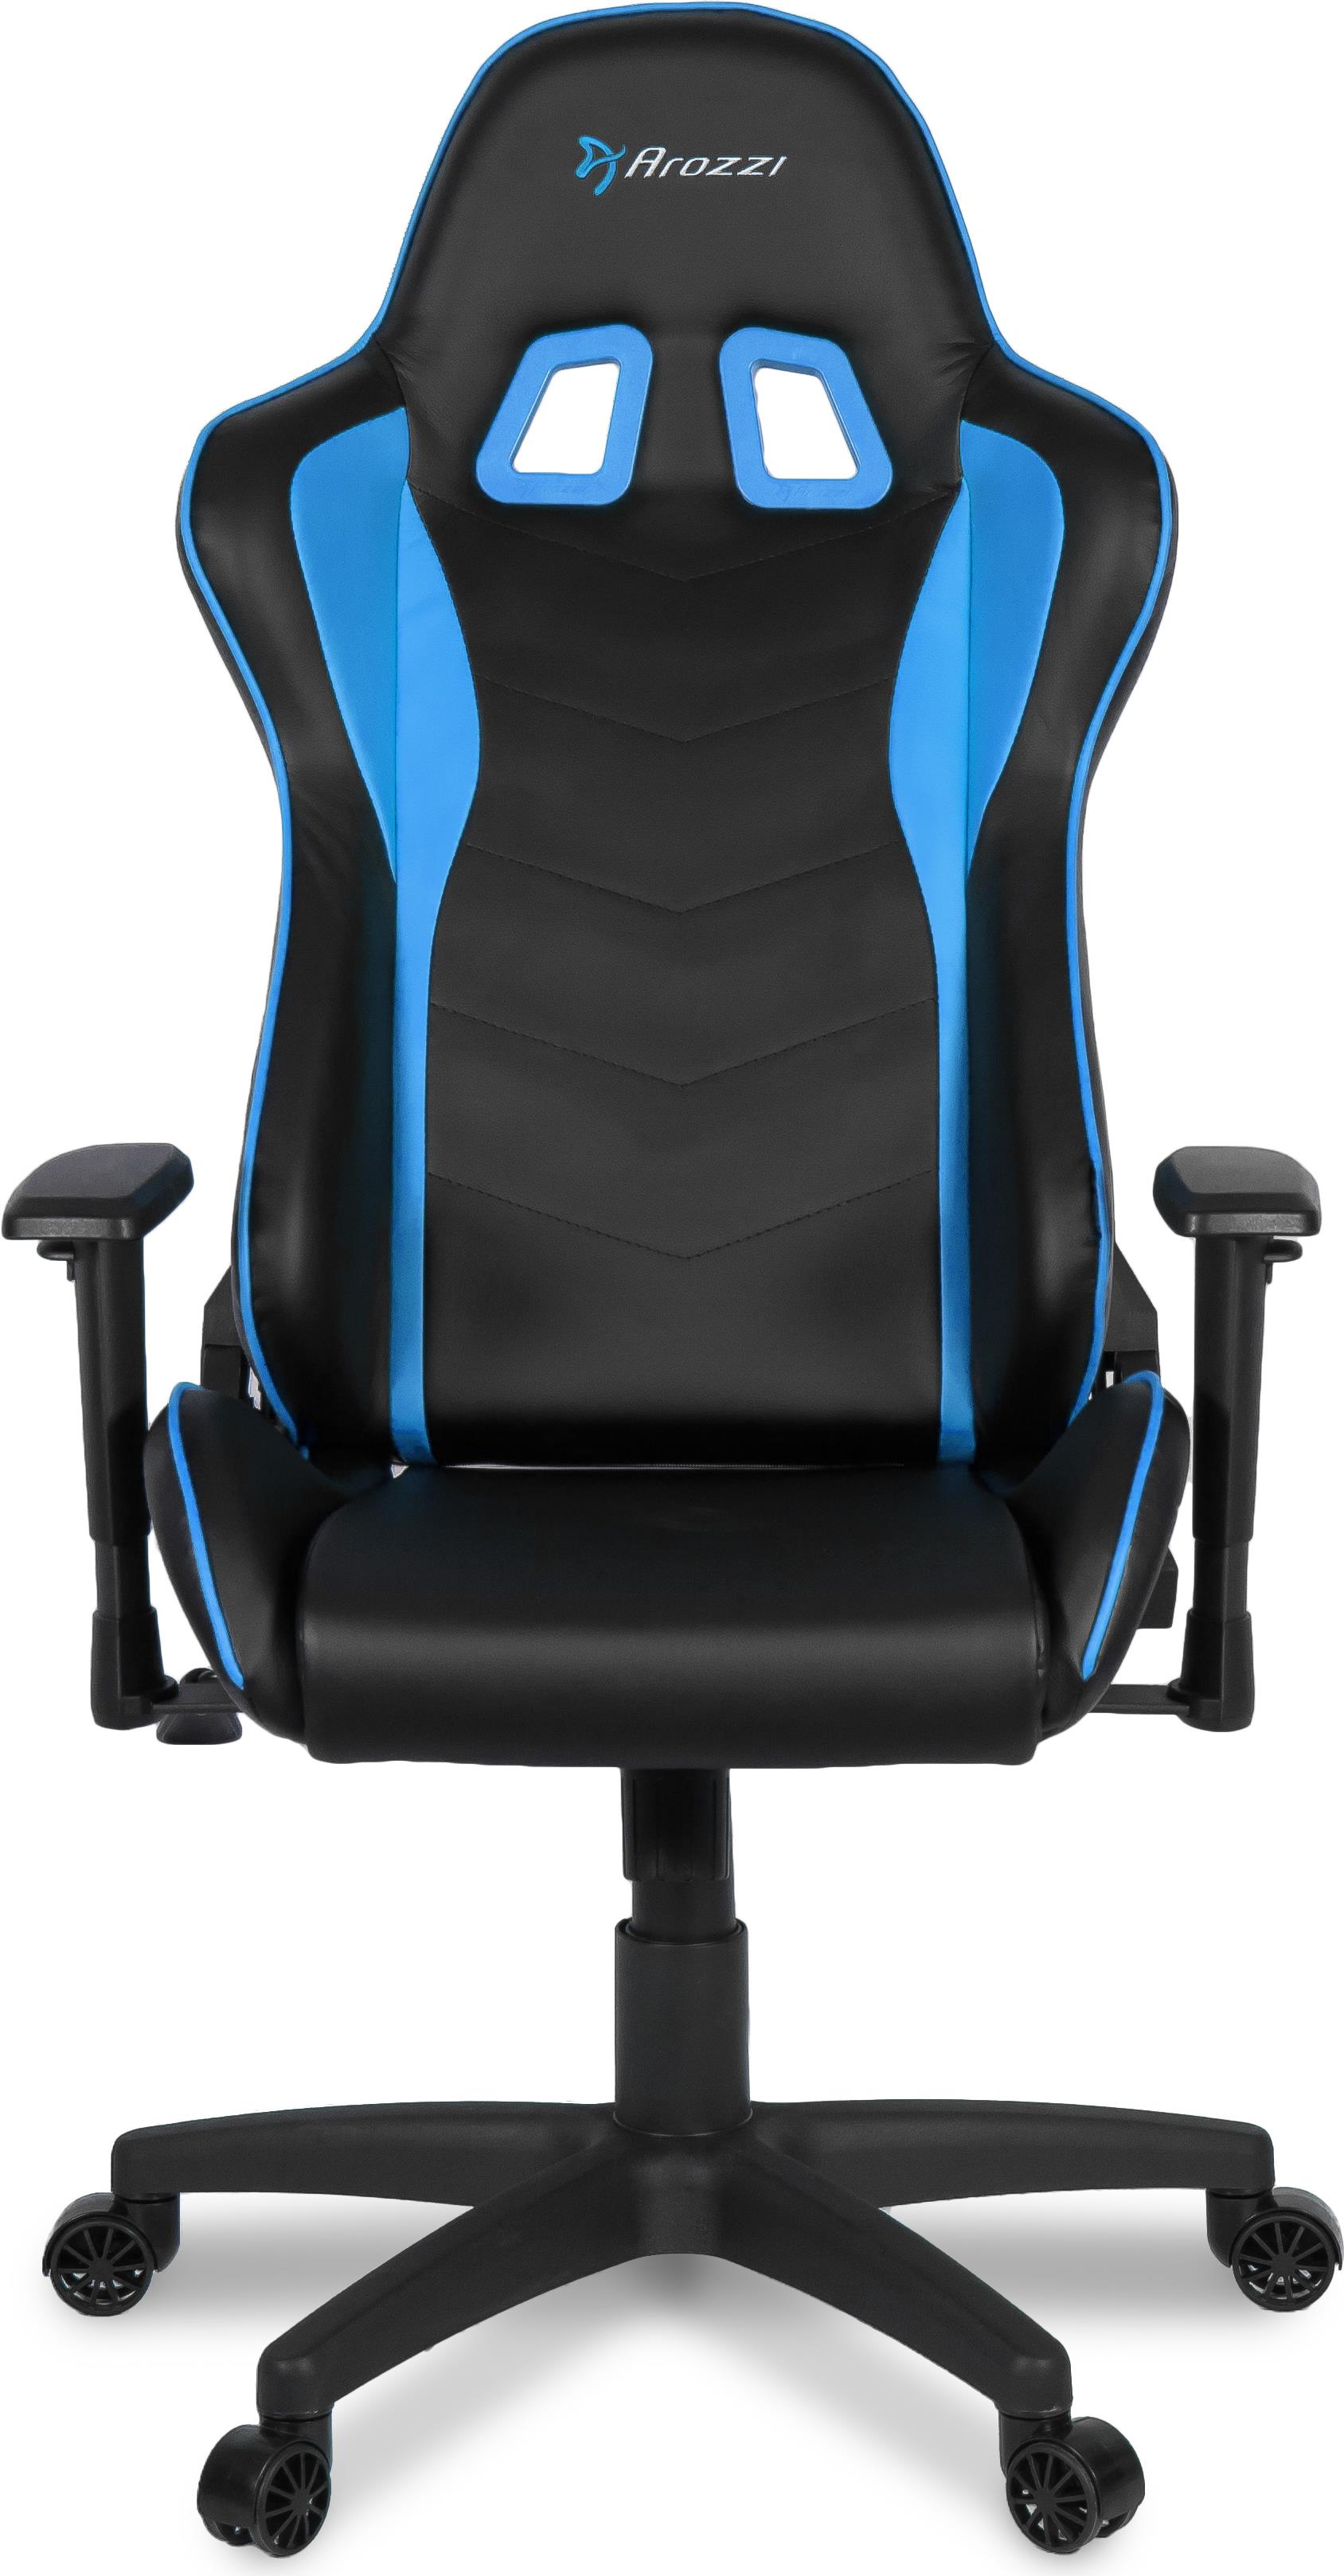 Arozzi Mezzo V2 - PC-Spielstuhl - 120 kg - Gepolsterter Sitz - Gepolsterte Rückenlehne - Schwarz - Blau - Schwarz - Blau (MEZZO-V2-BLUE)